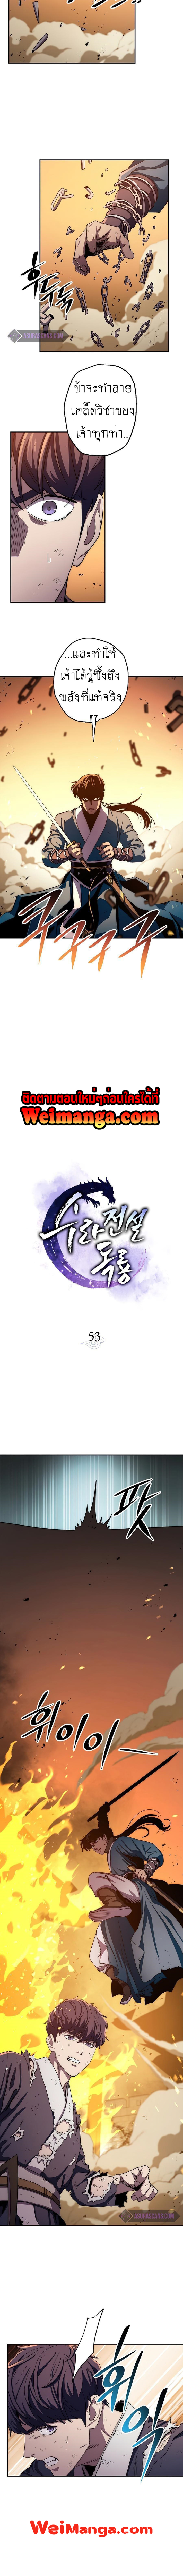 Legend of Asura53 (4)